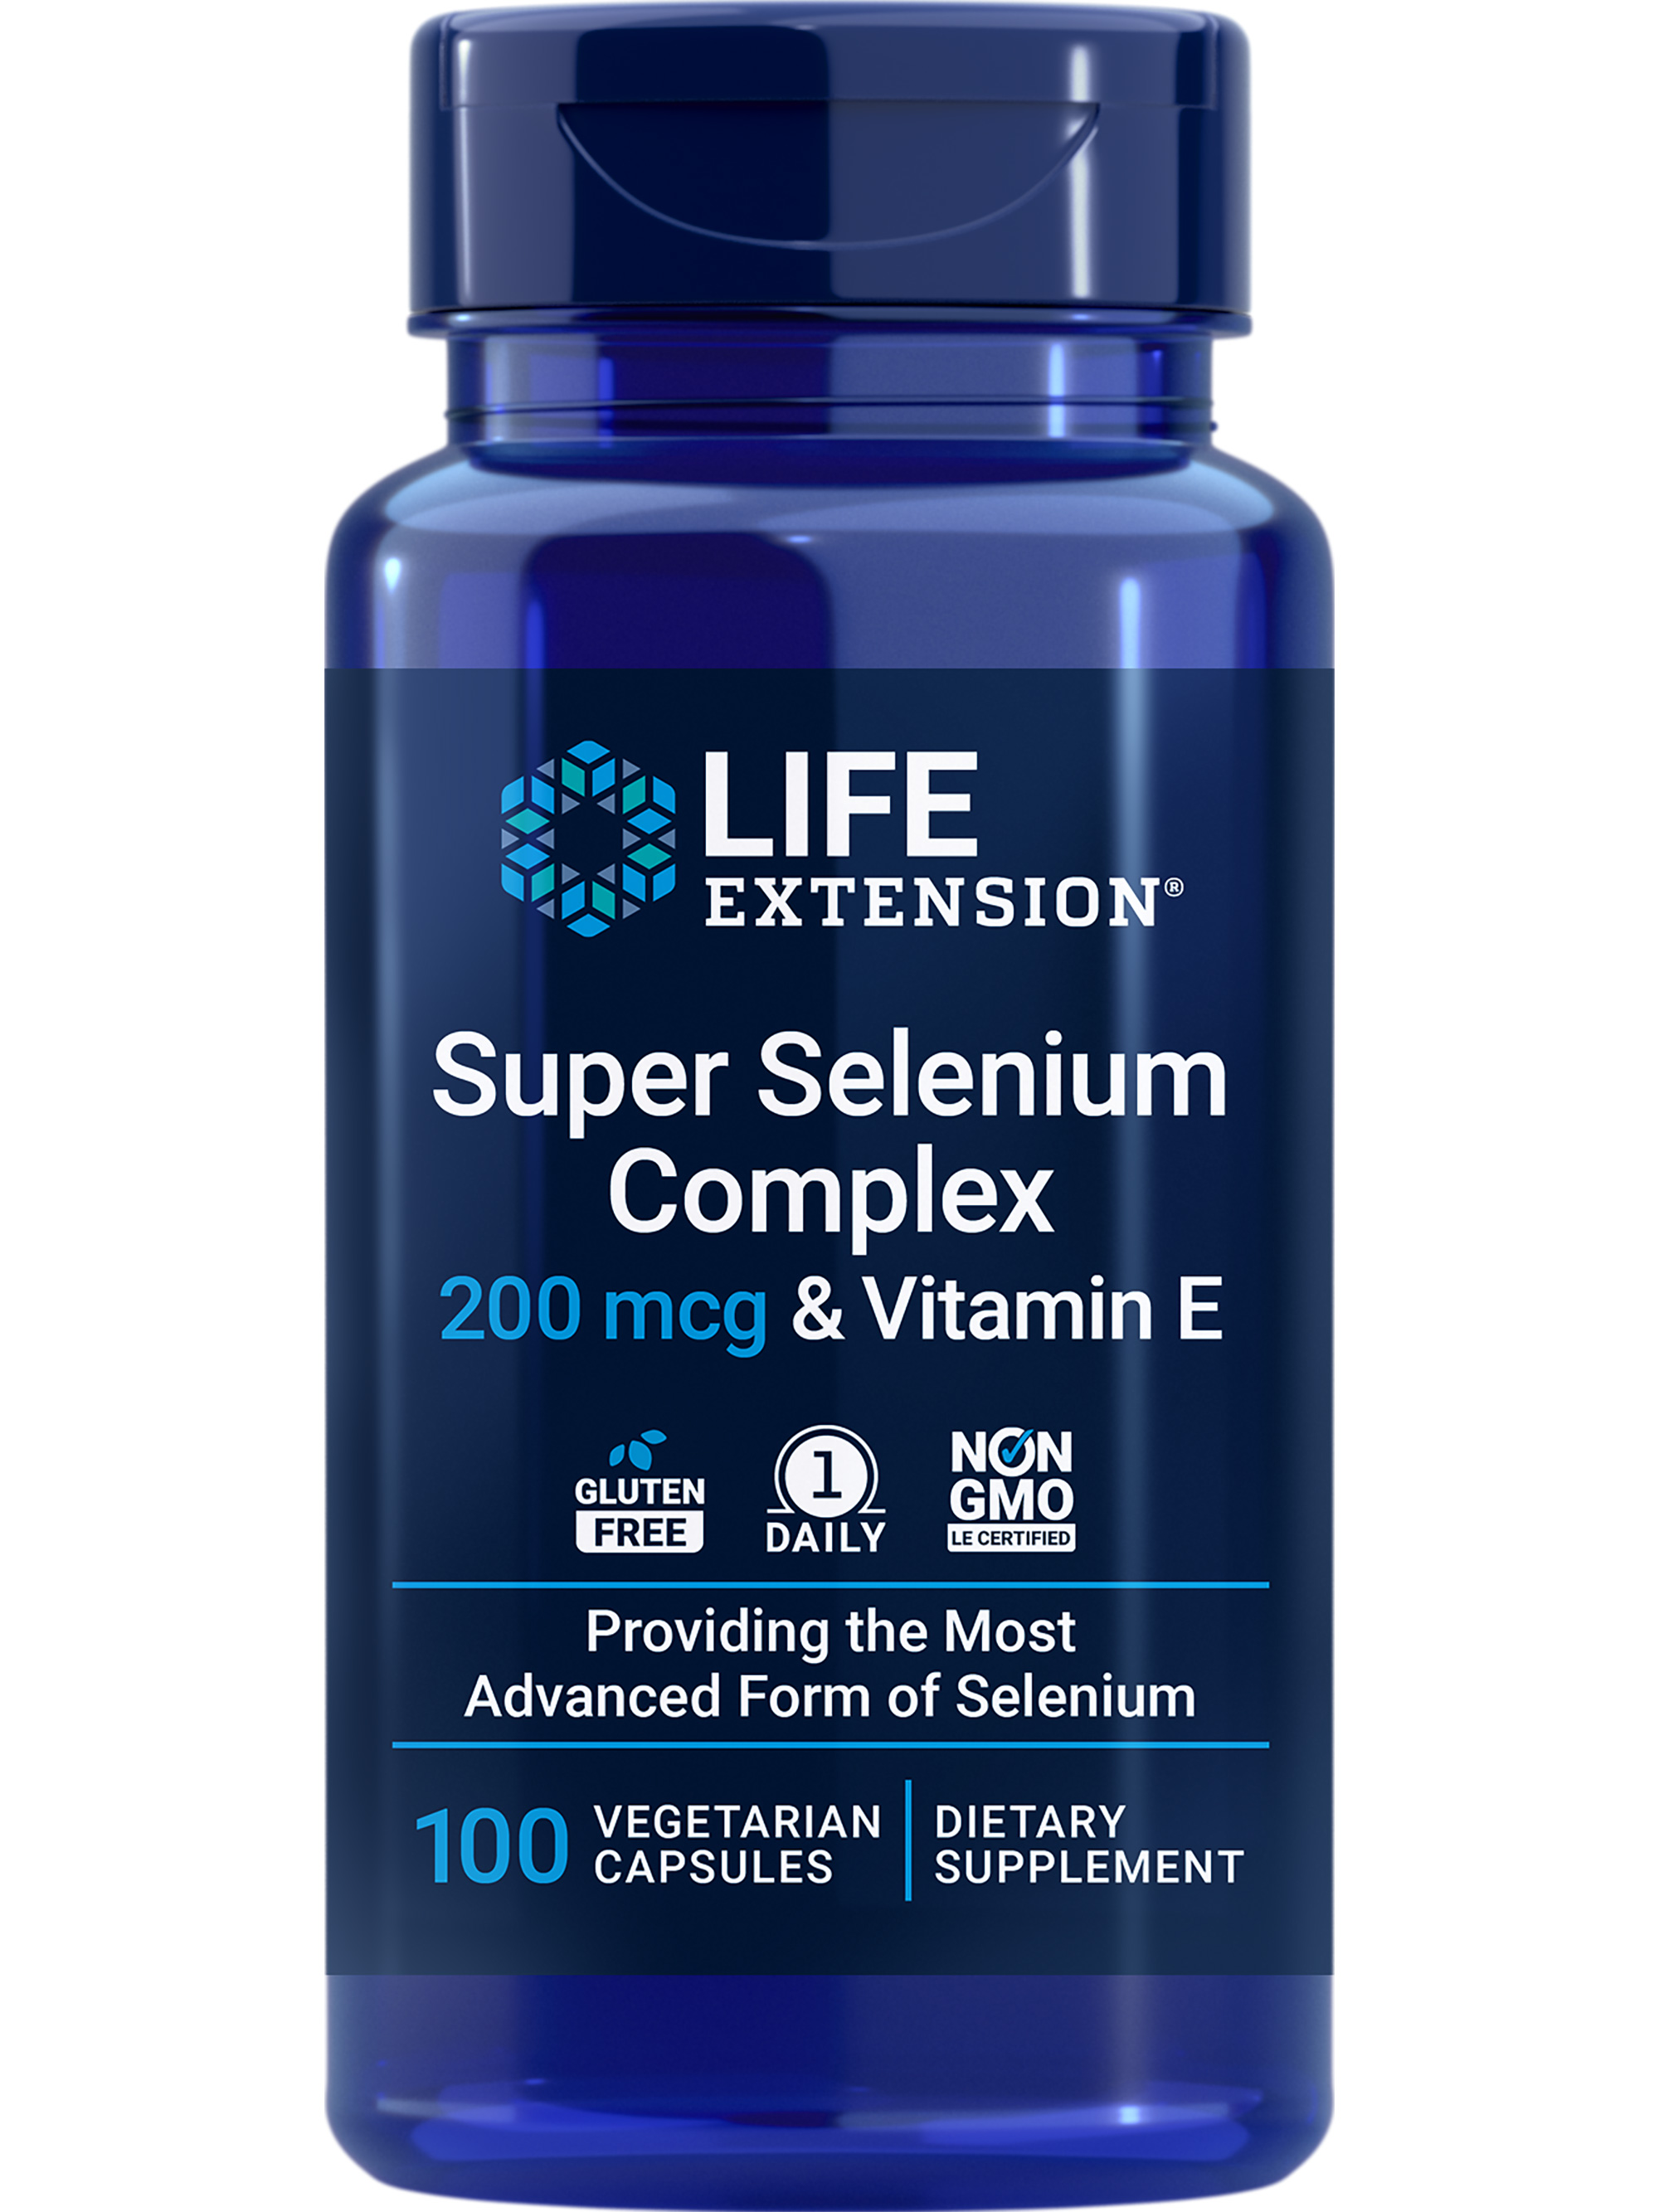 Life Extension Super Selenium Complex, 200 mcg – 3 Forms of Selenium, Vitamin E – Cellular Health & Longevity Support – Gluten-Free, Non-GMO, Vegetarian, 1 Daily – 100 Capsules - image 1 of 10